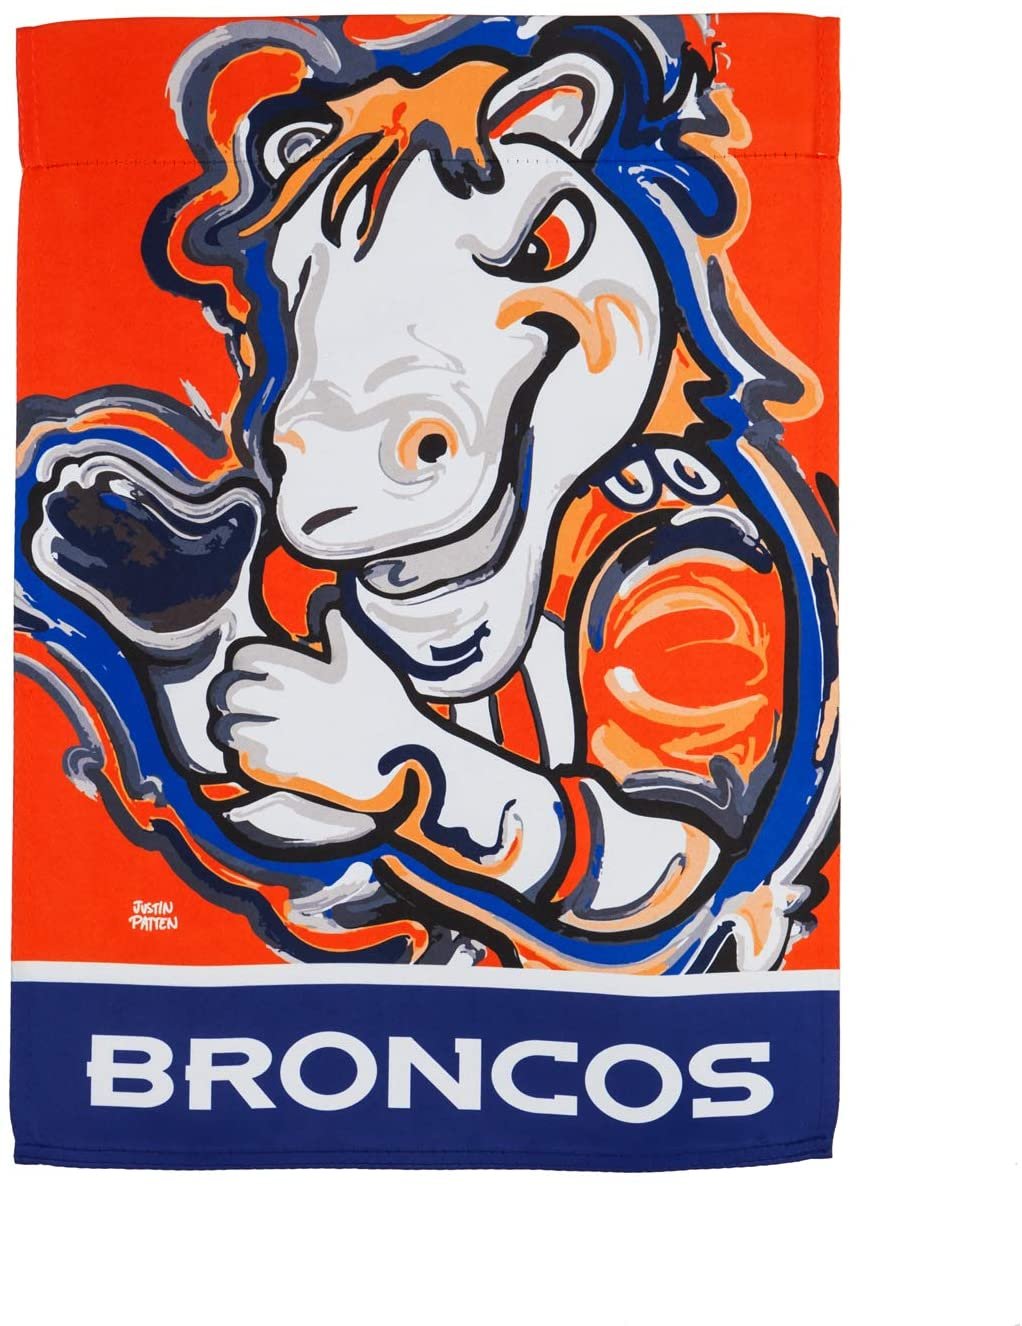 Denver Broncos Premium Double Sided Garden Flag Banner, Justin Patten Design, 13x18 Inch